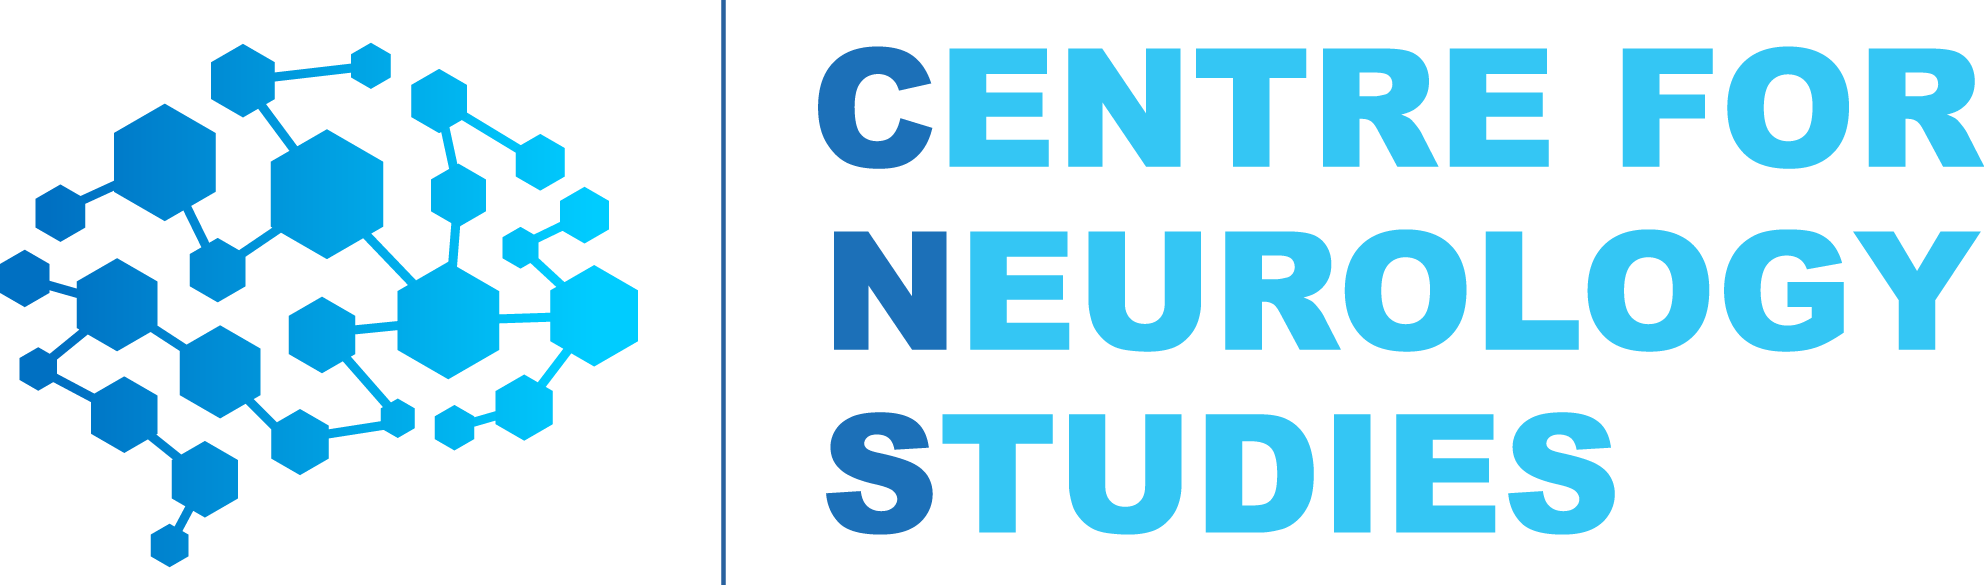 The Centre for Neurology Studies